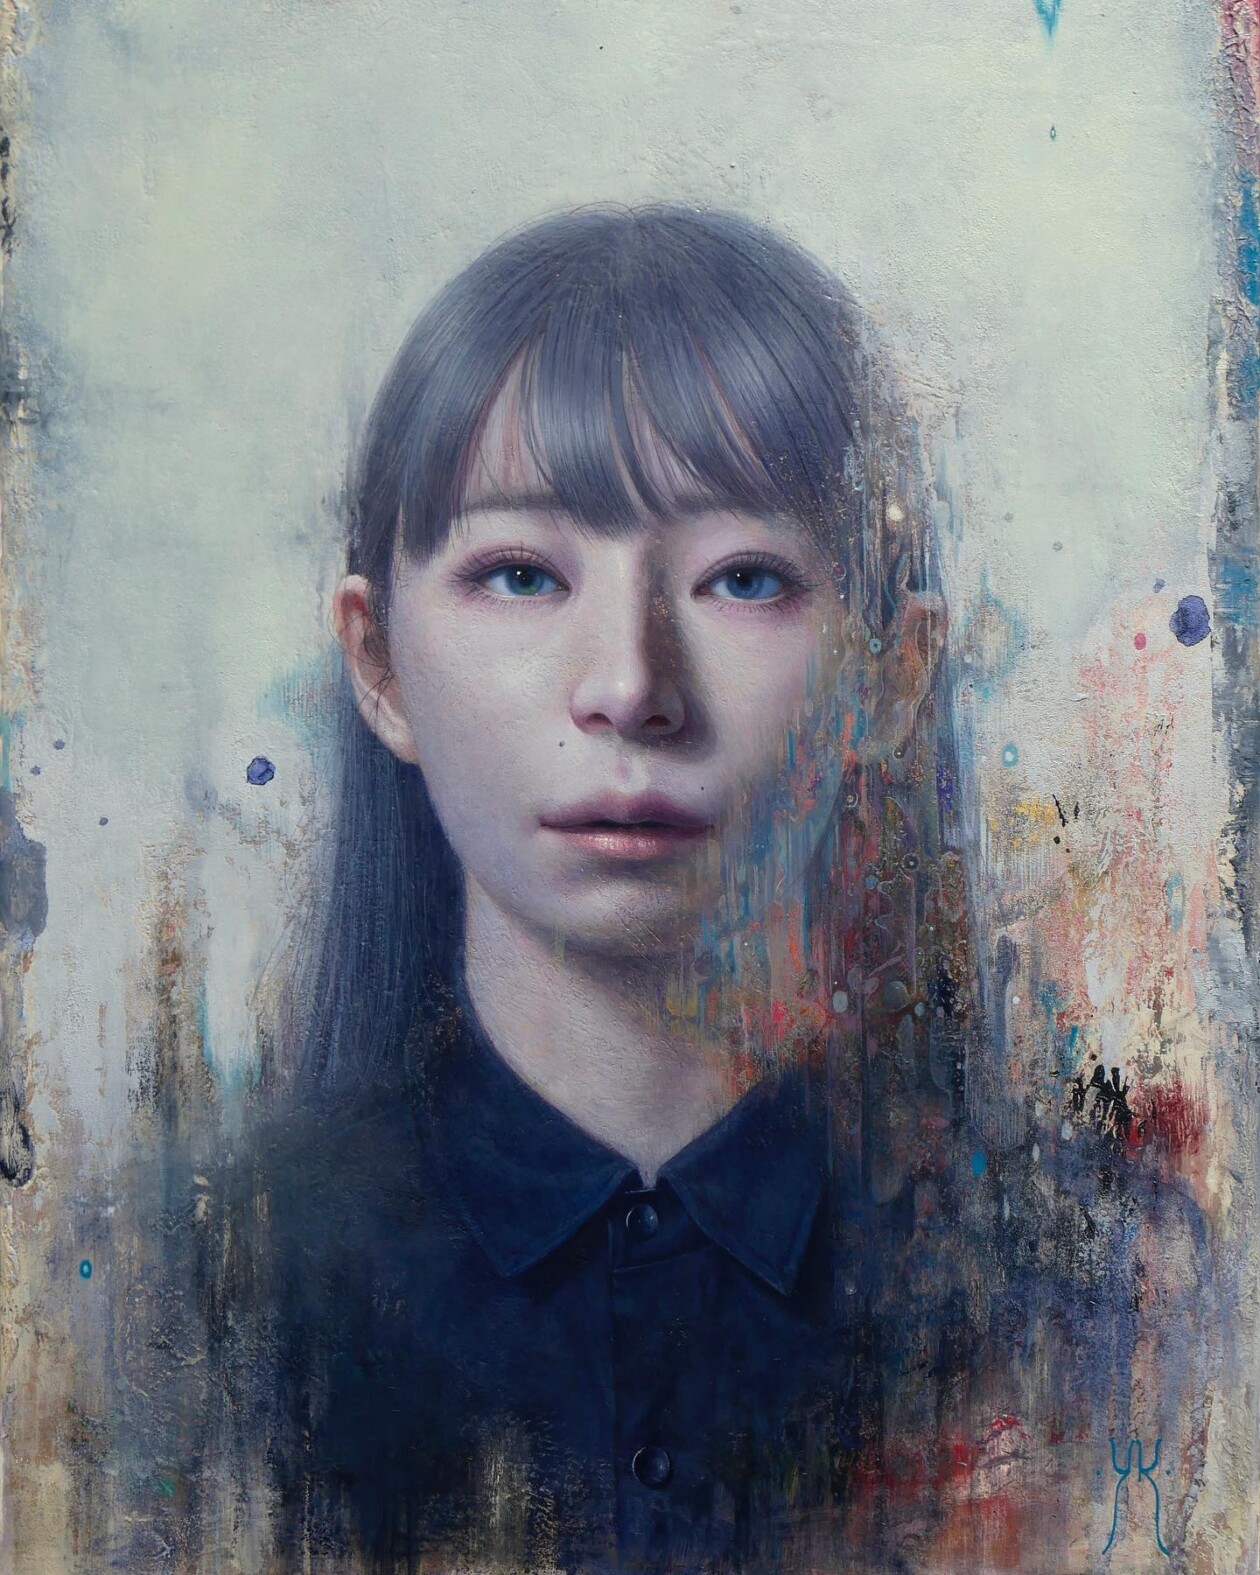 Capturing The Unseen, The Sublime Artistry Of Yosuke Kawashima (3)